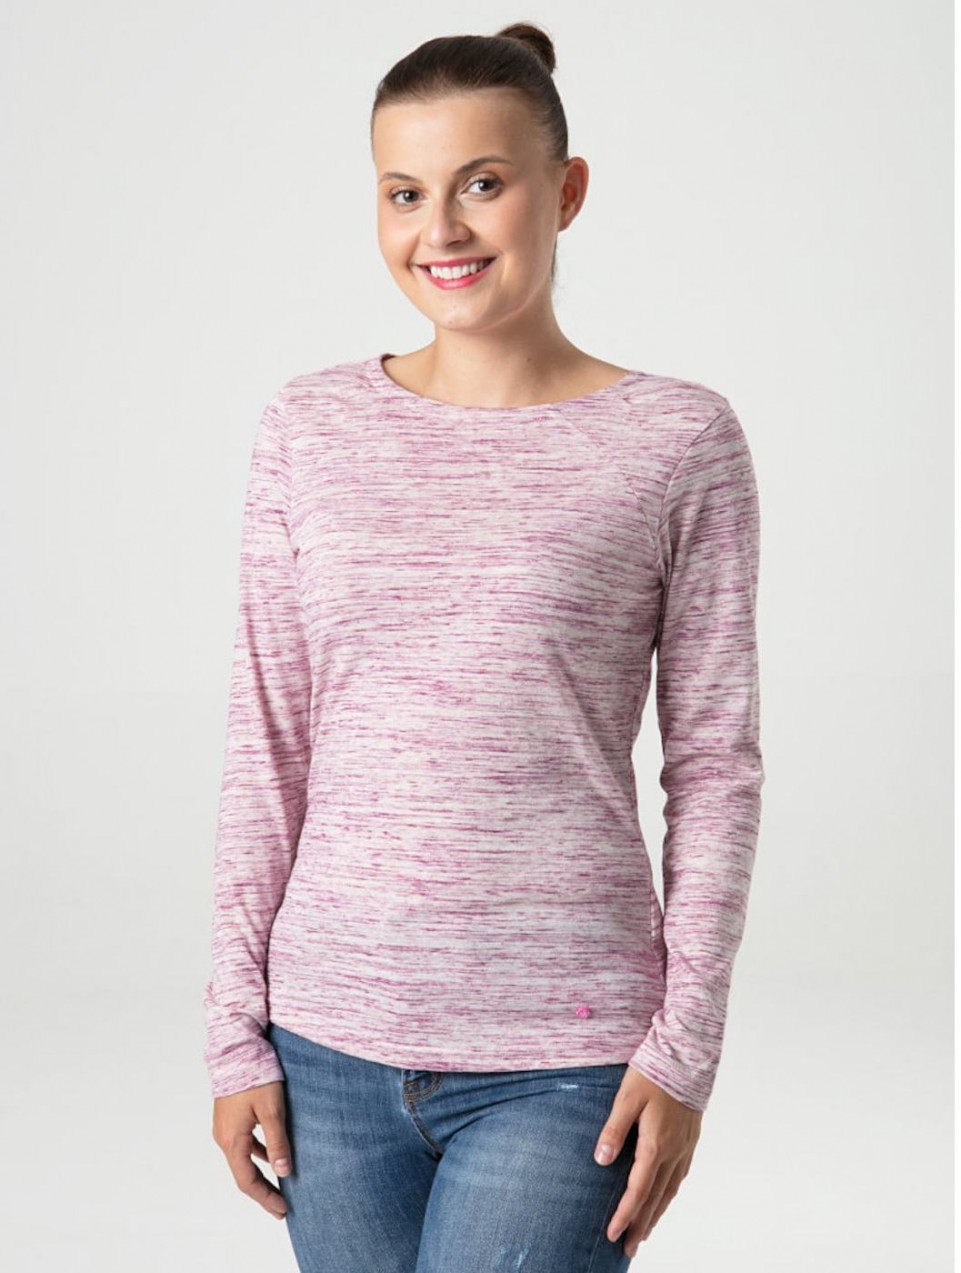 BENEDA women's t-shirt pink